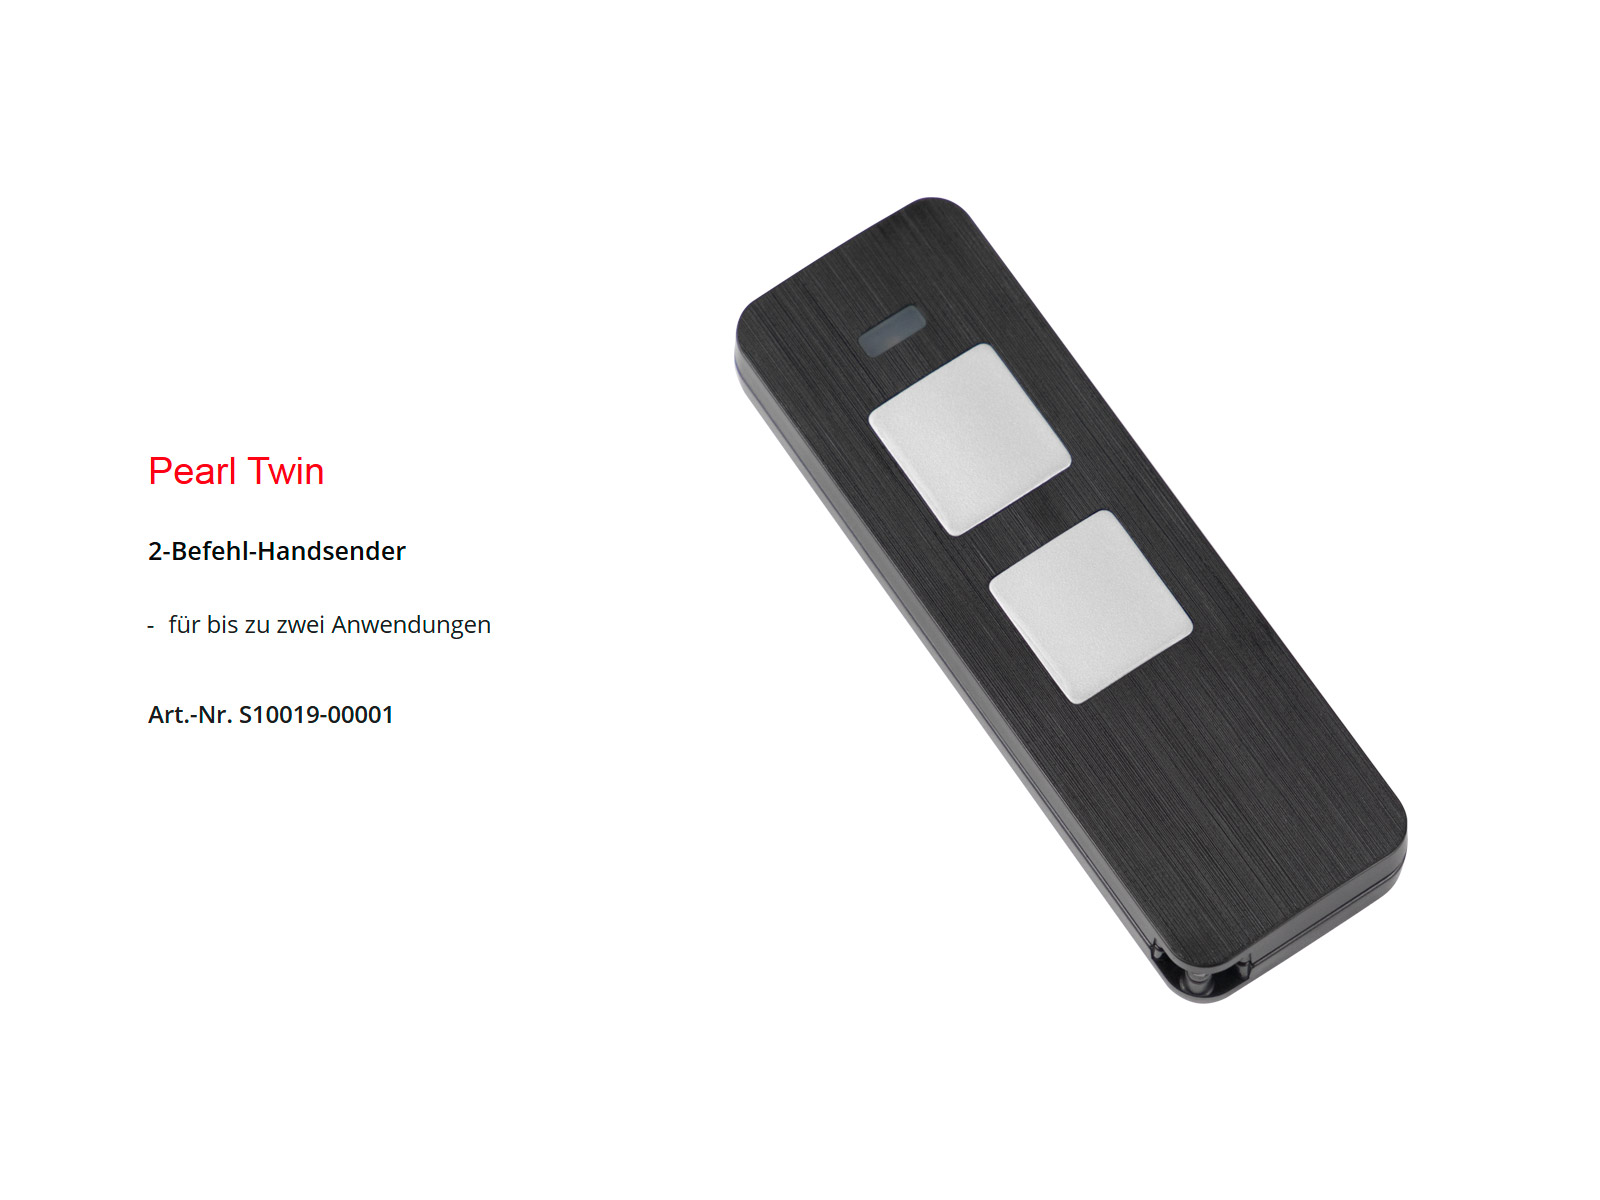 2x Sommer 2-Befehl Handsender Pearl Twin kompatibel zu Sommer Mini 4026  S10019-00001